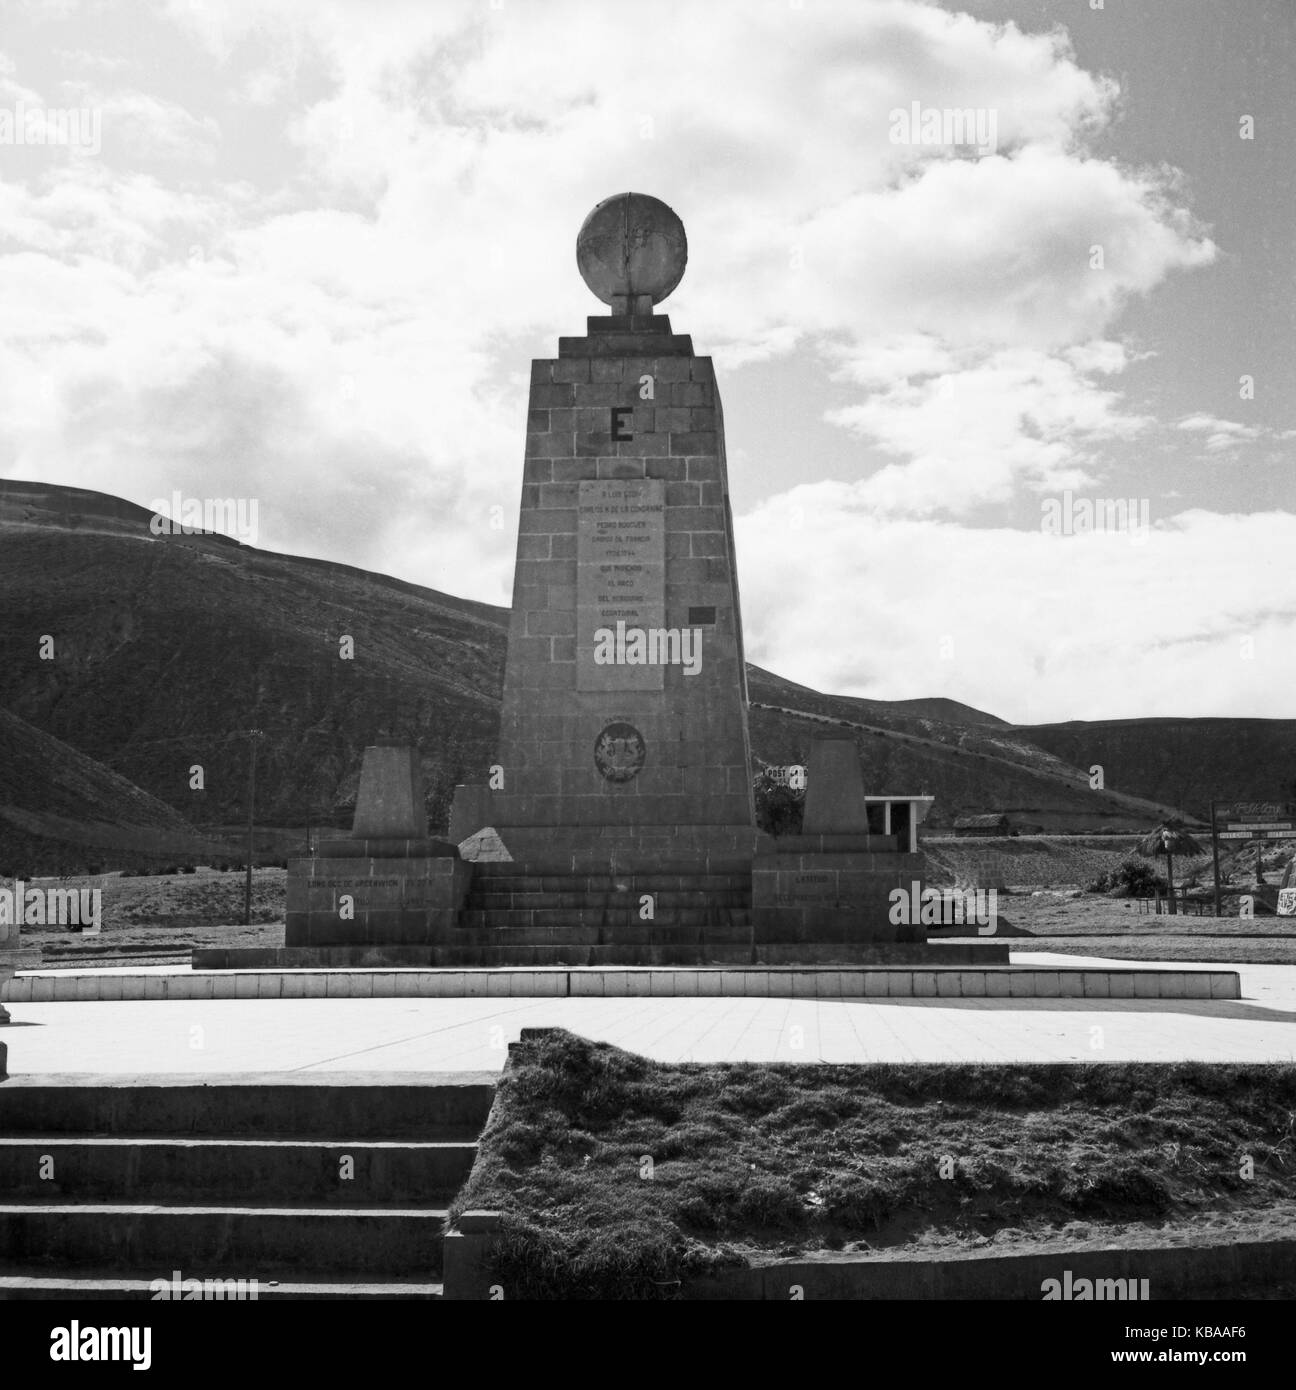 Das Äquatordenkmal Mitad del Mundo, nördlich von Quito, Ecuador 1960er Jahre. Equatore monumento vicino a Quito, Ecuador 1960s. Foto Stock